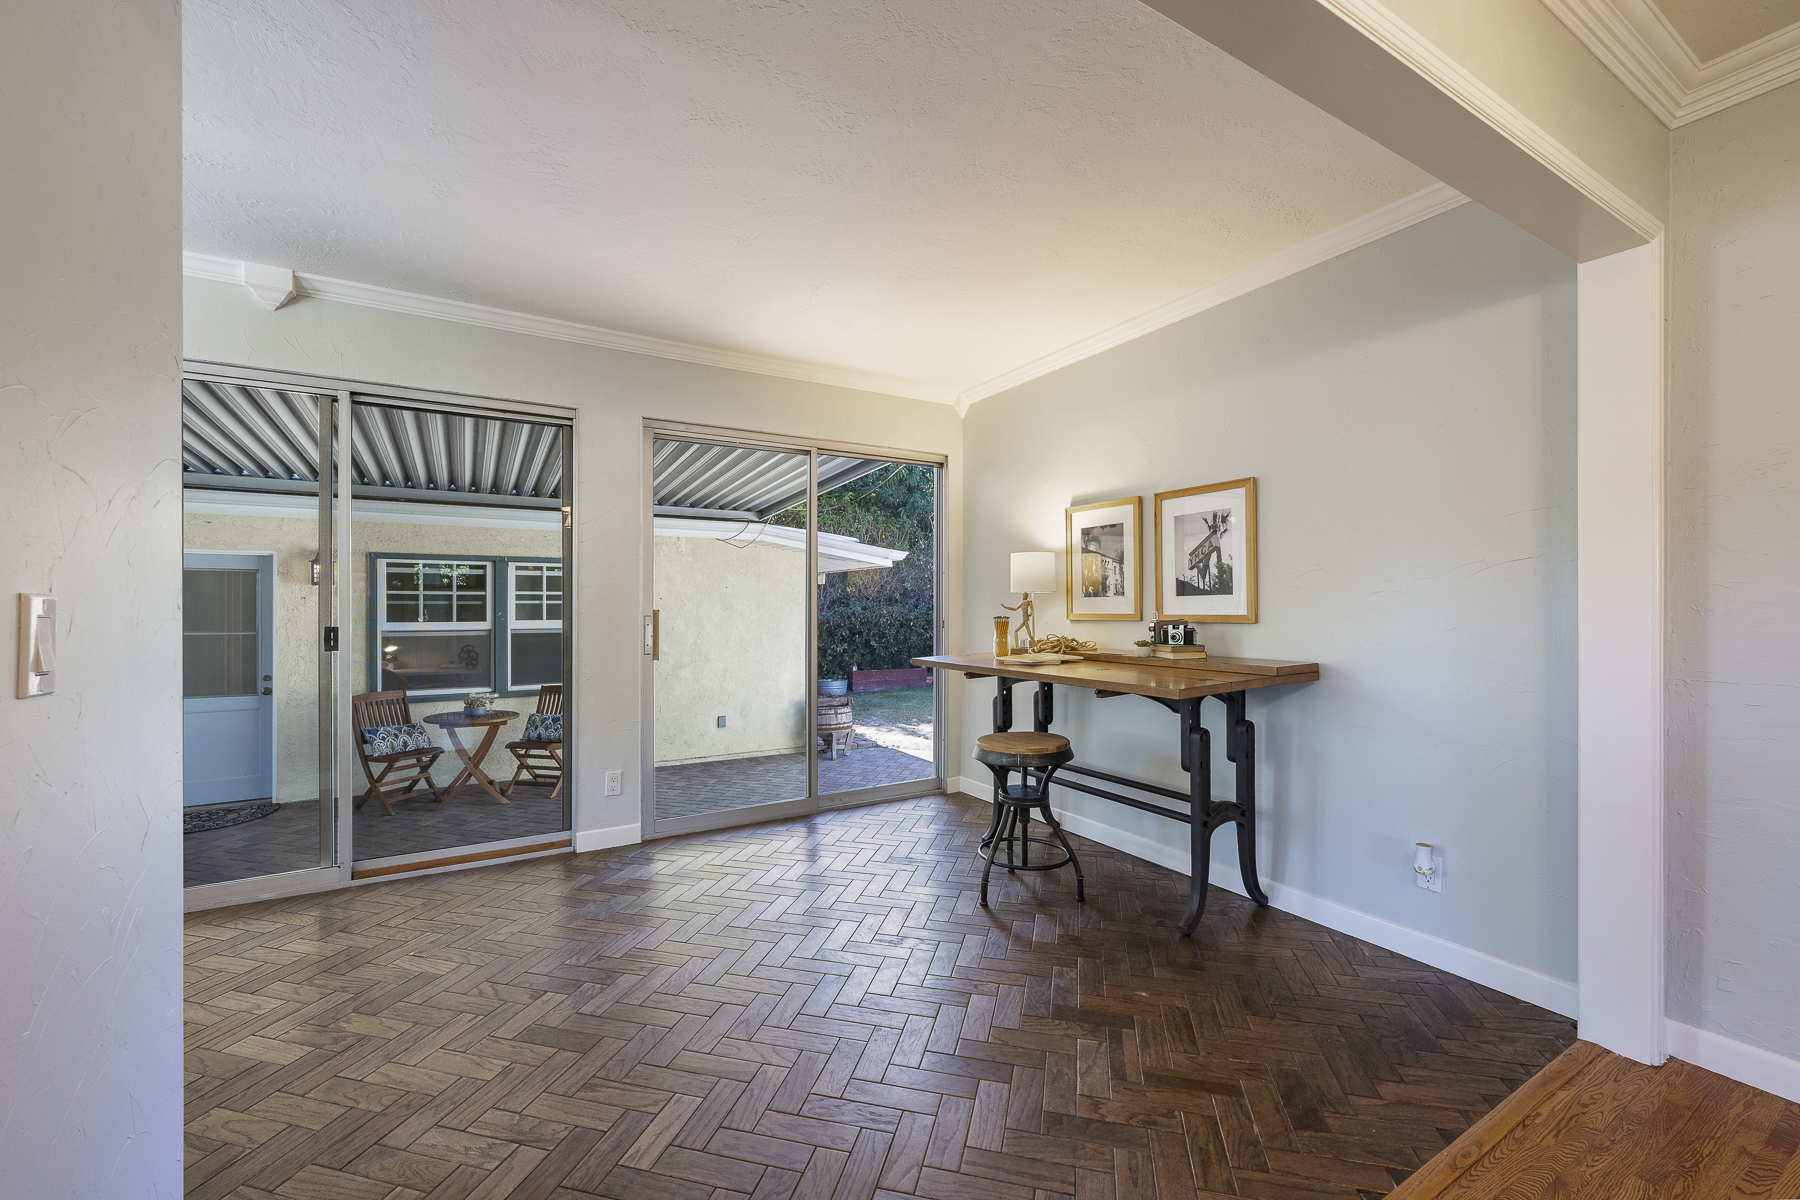 411 Truman Ave, Fullerton, CA 92832: Living space with hearing bone wood floors.